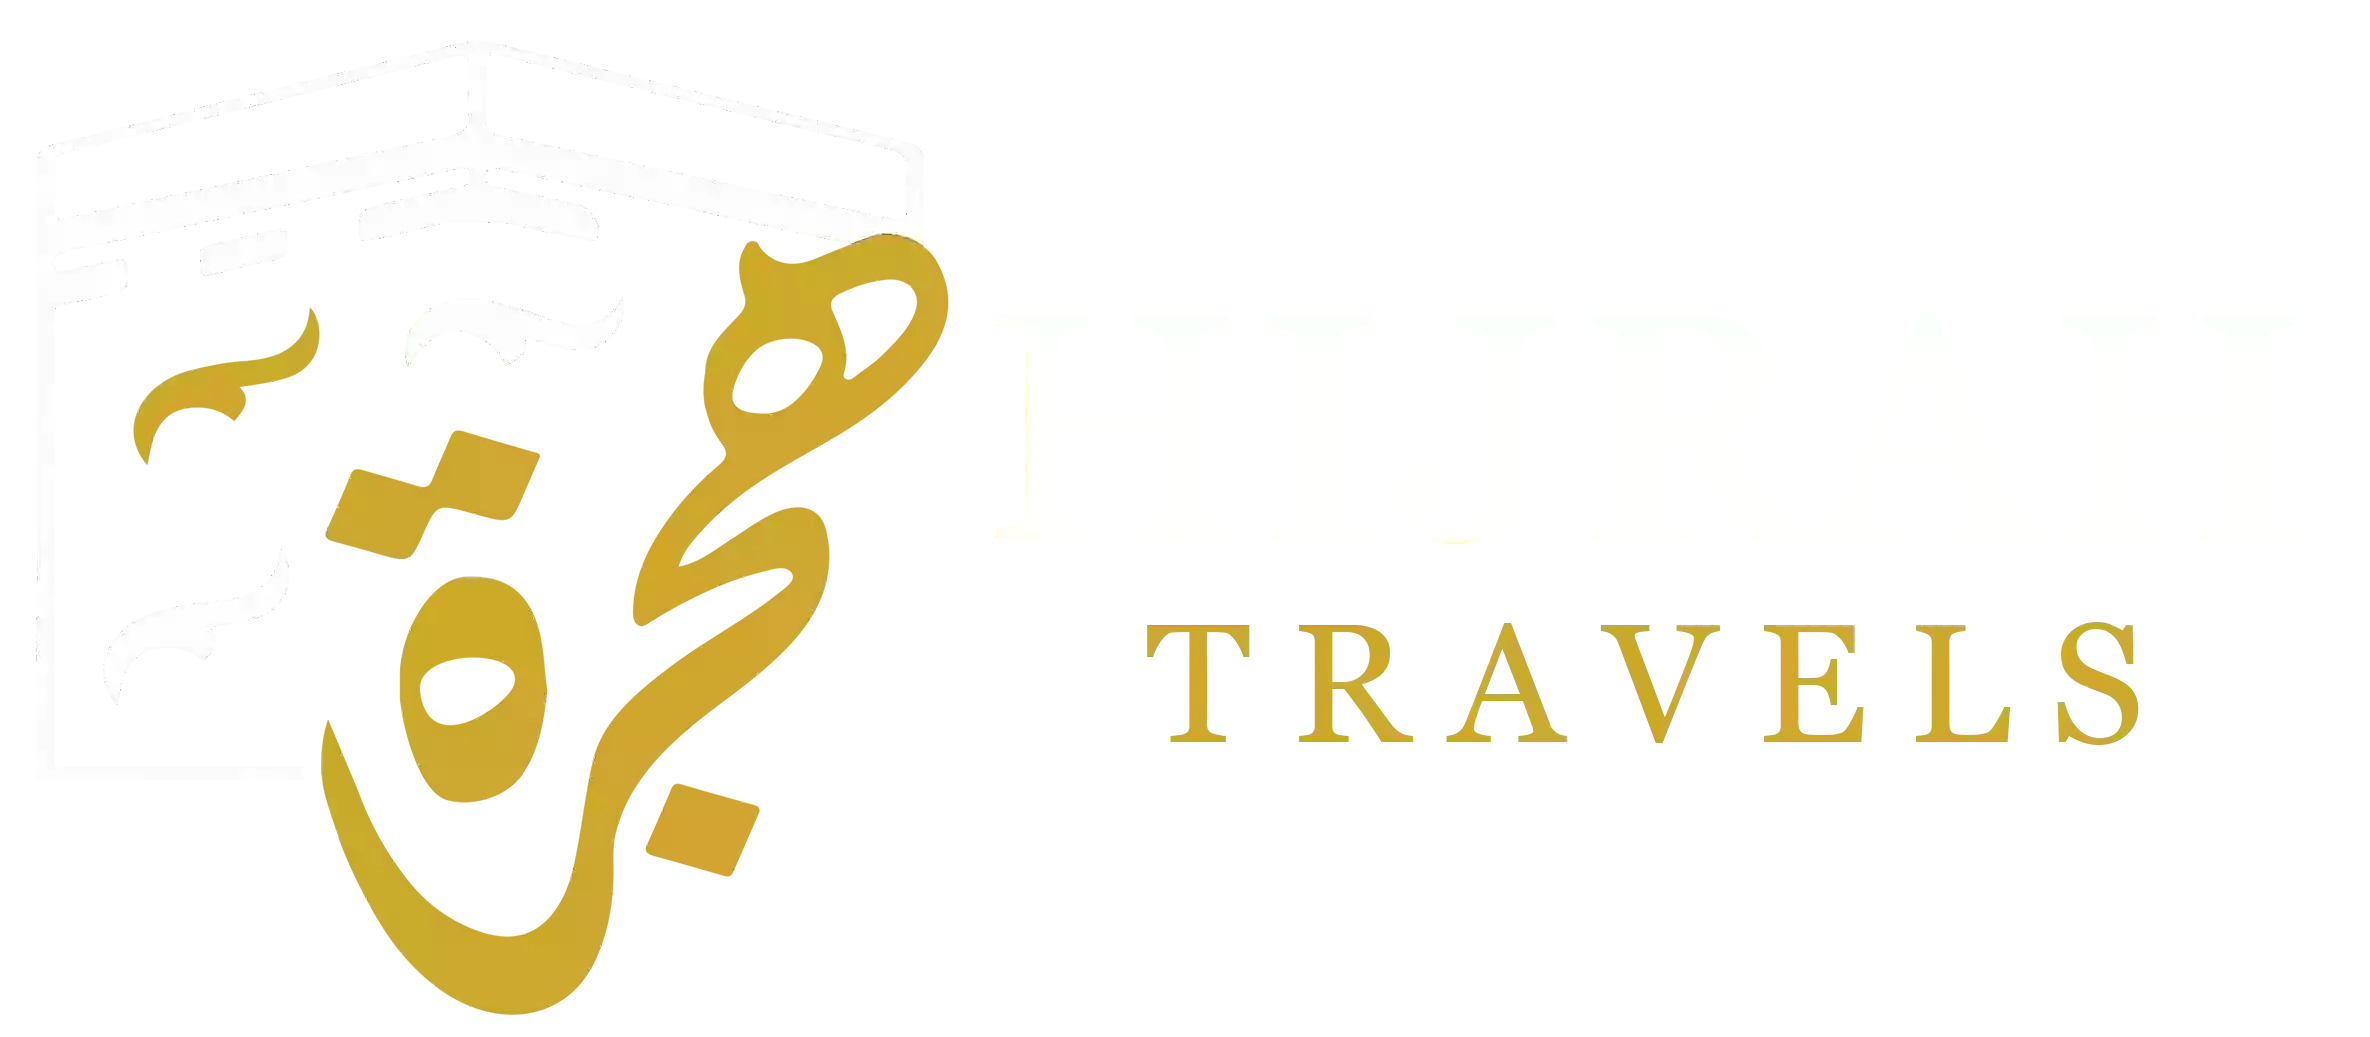 Hilal Tours & Travel Ltd